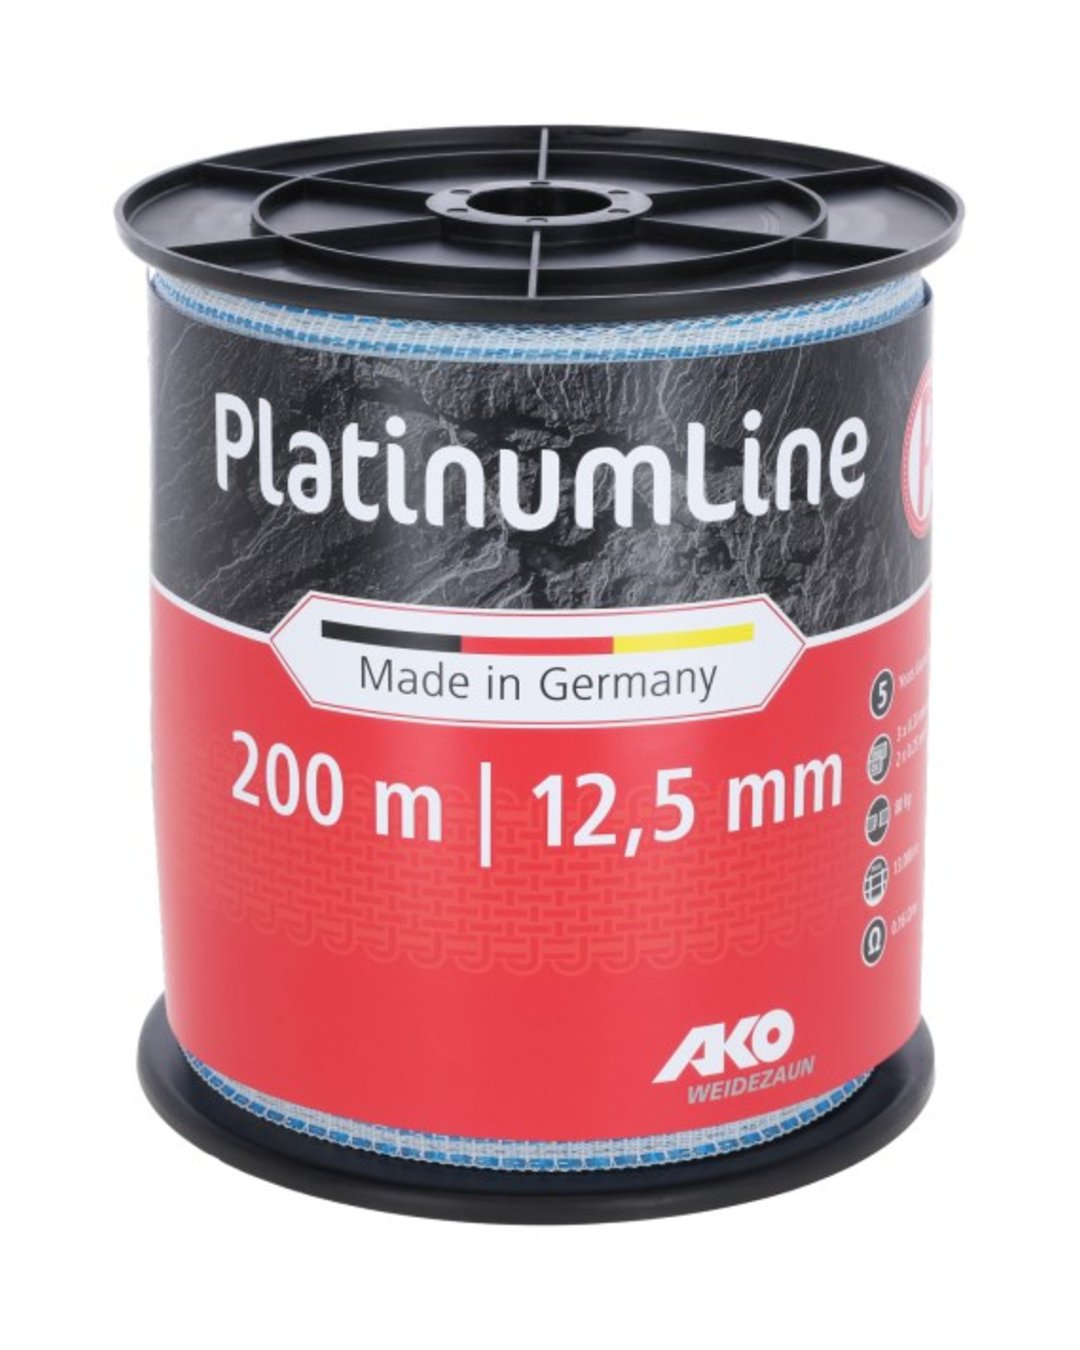 Weidezaunband PlatinumLine 200 m Standard 12,5 mm